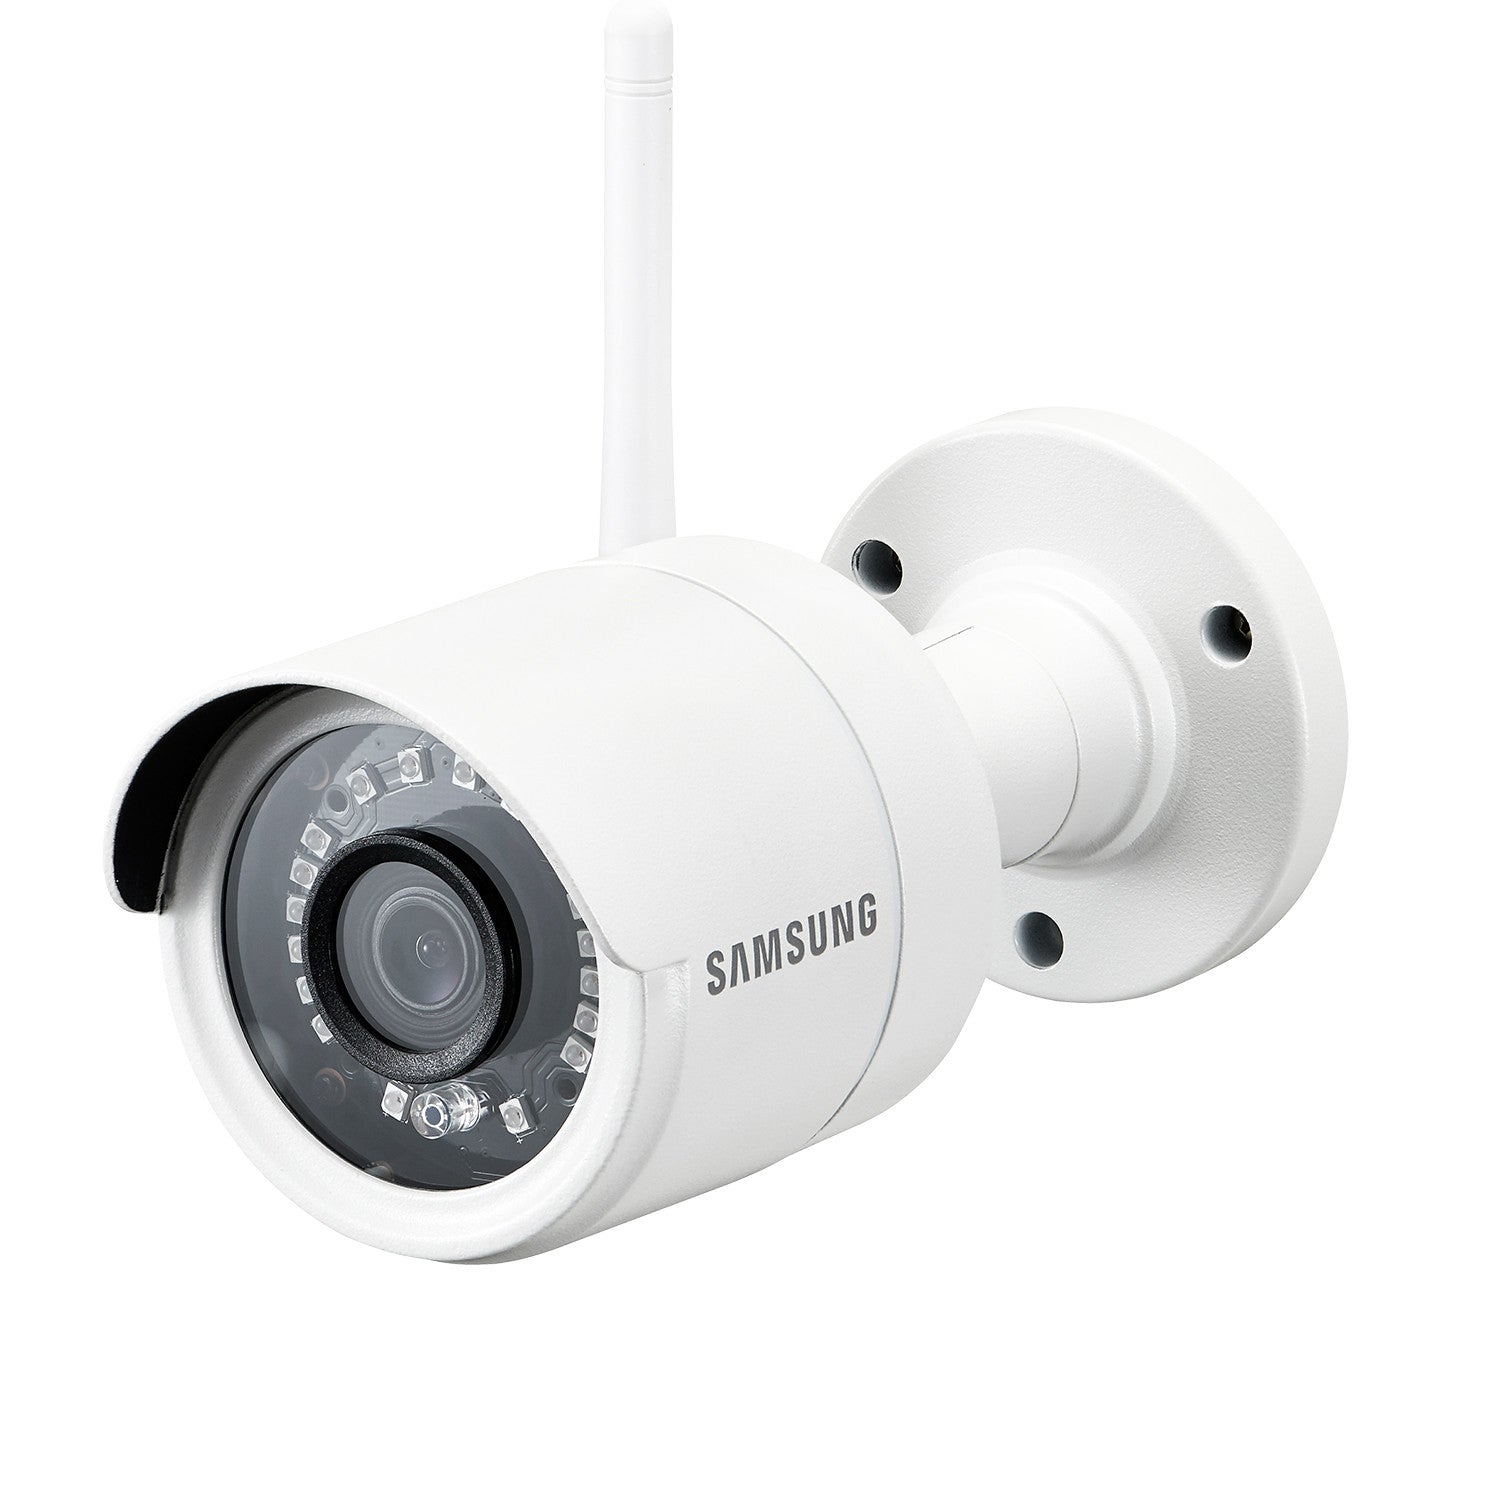 samsung wireless camera system